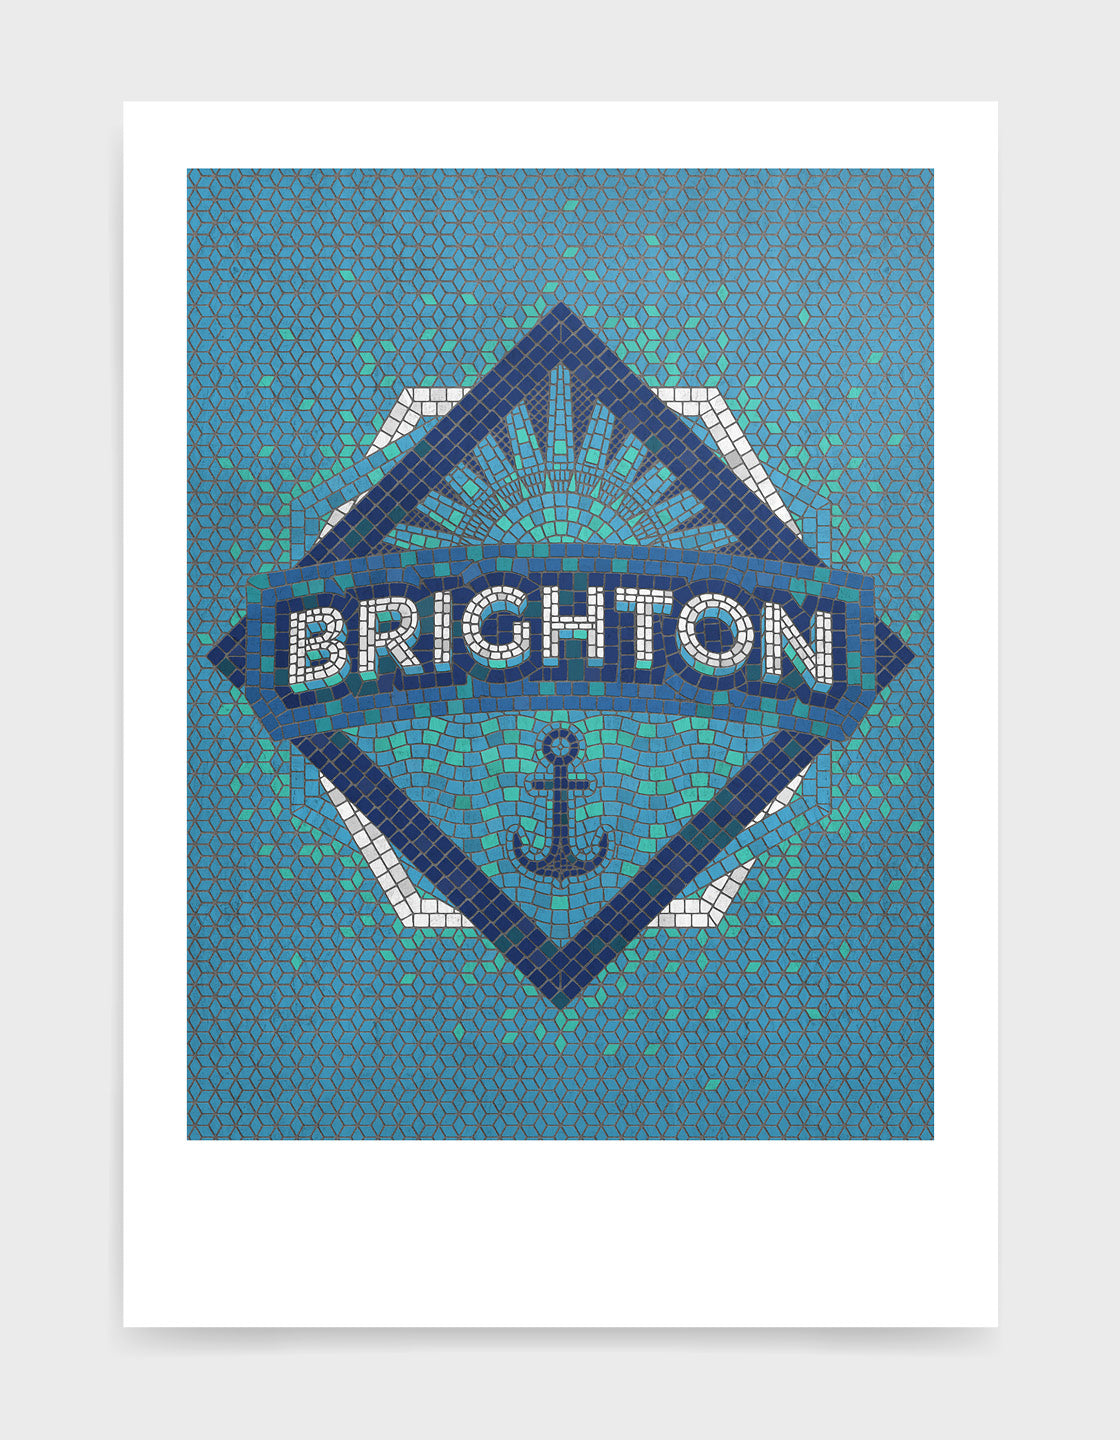 Blue mosaic art print with Brighton text and an anchor